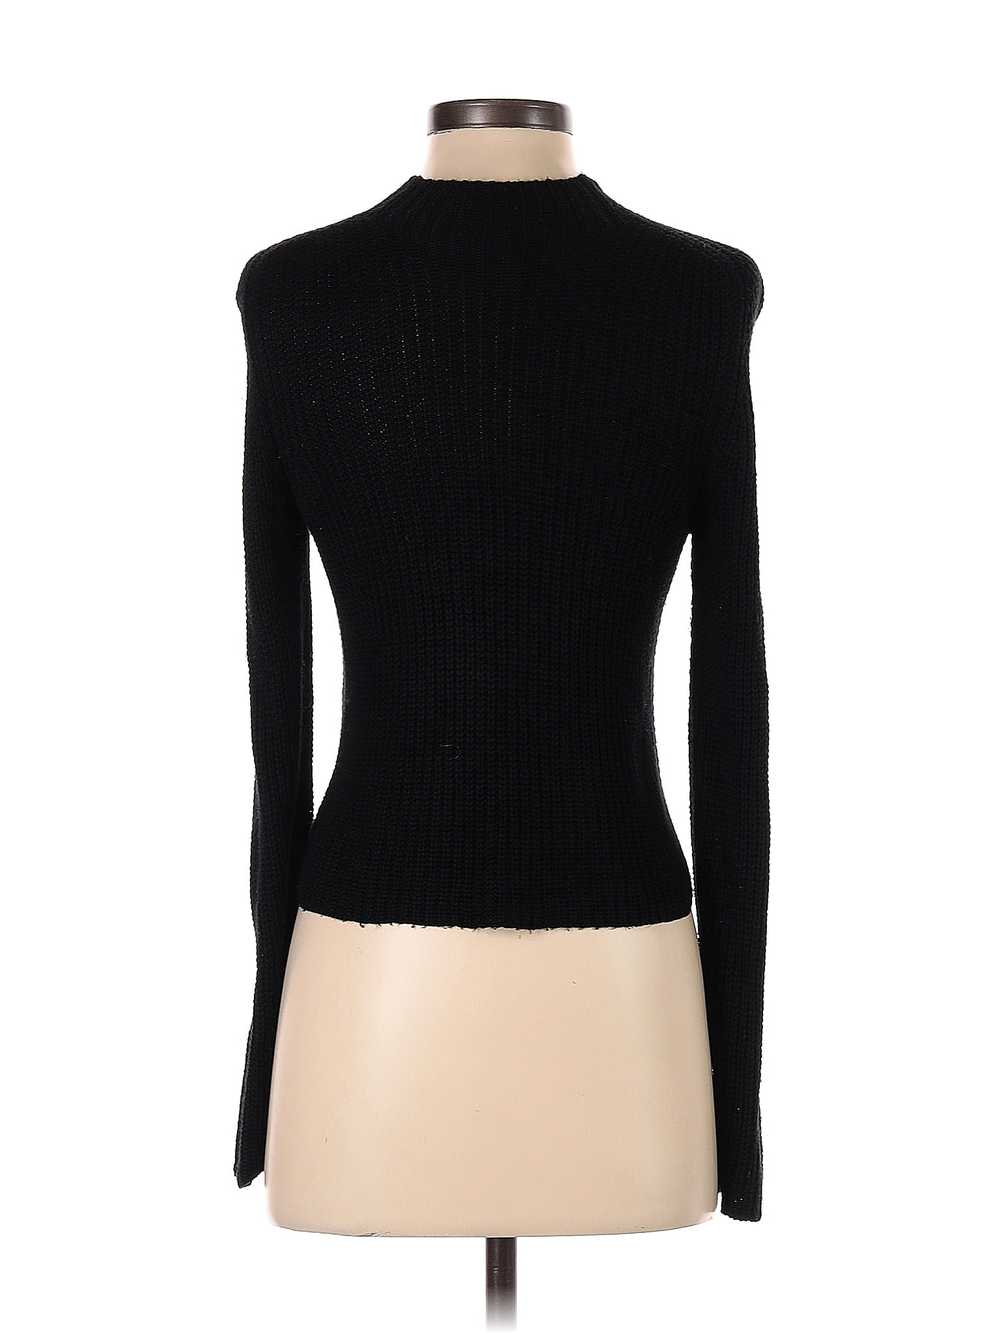 American Apparel Women Black Pullover Sweater S - image 2